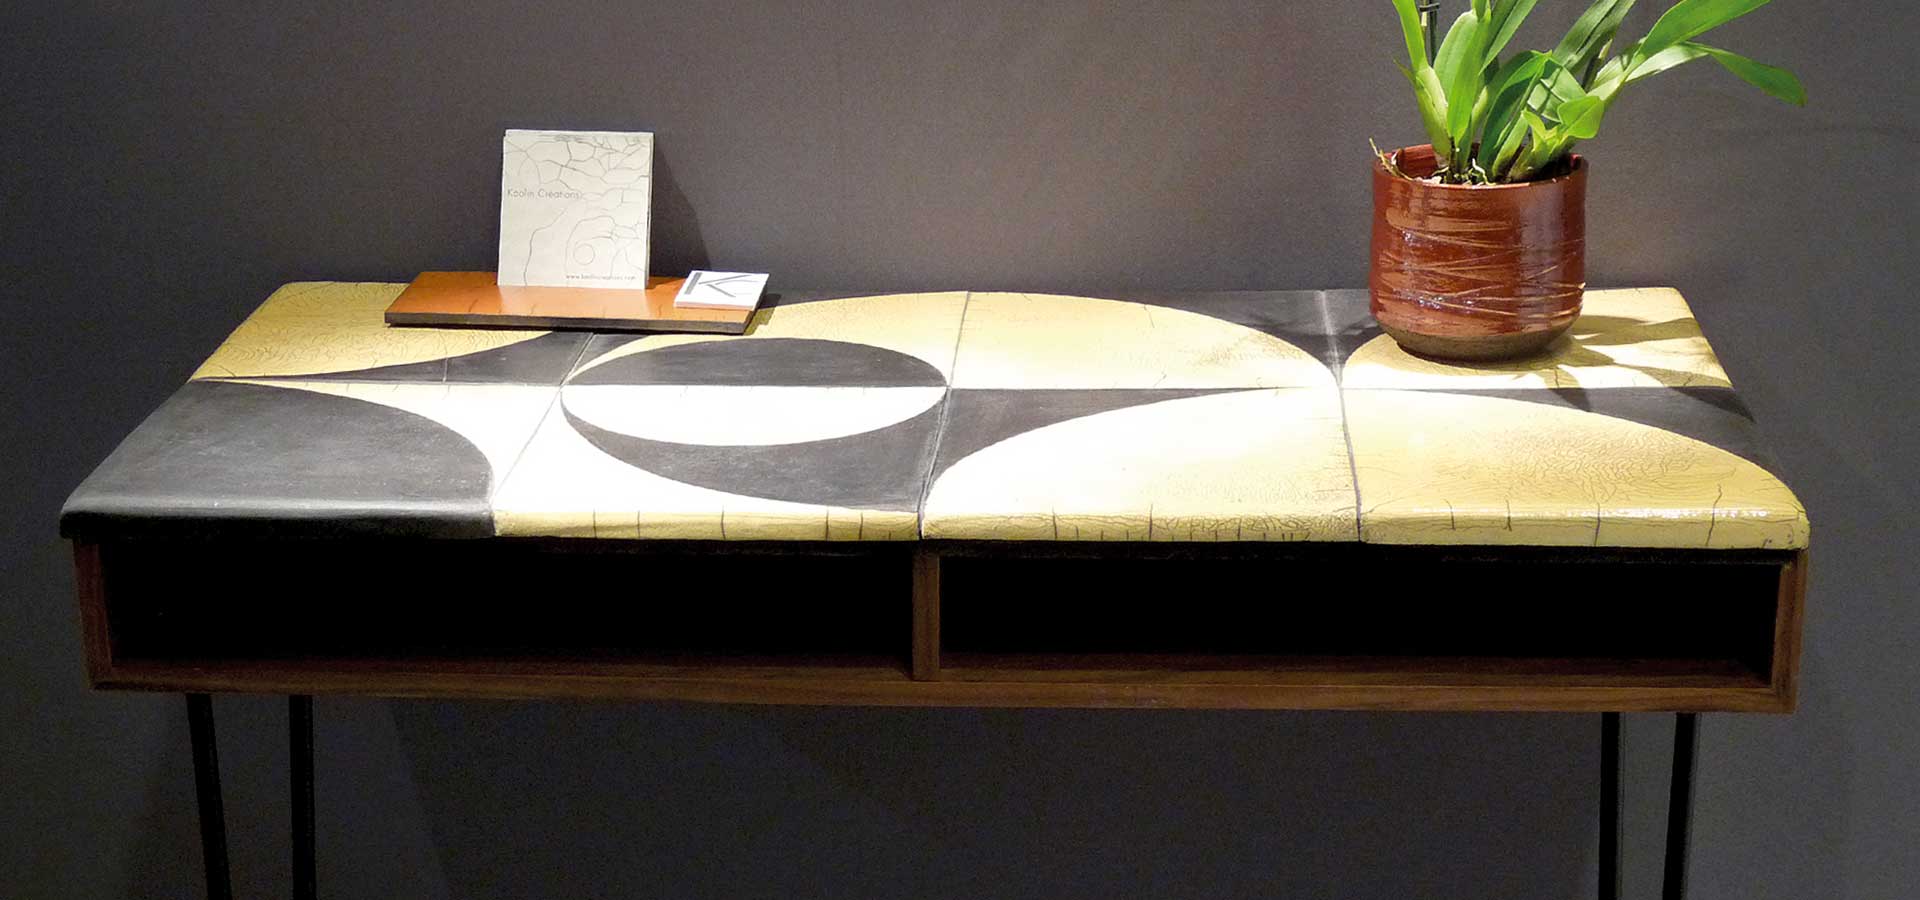 Raku Table console Ceramic tile by Fabienne L’Hostis